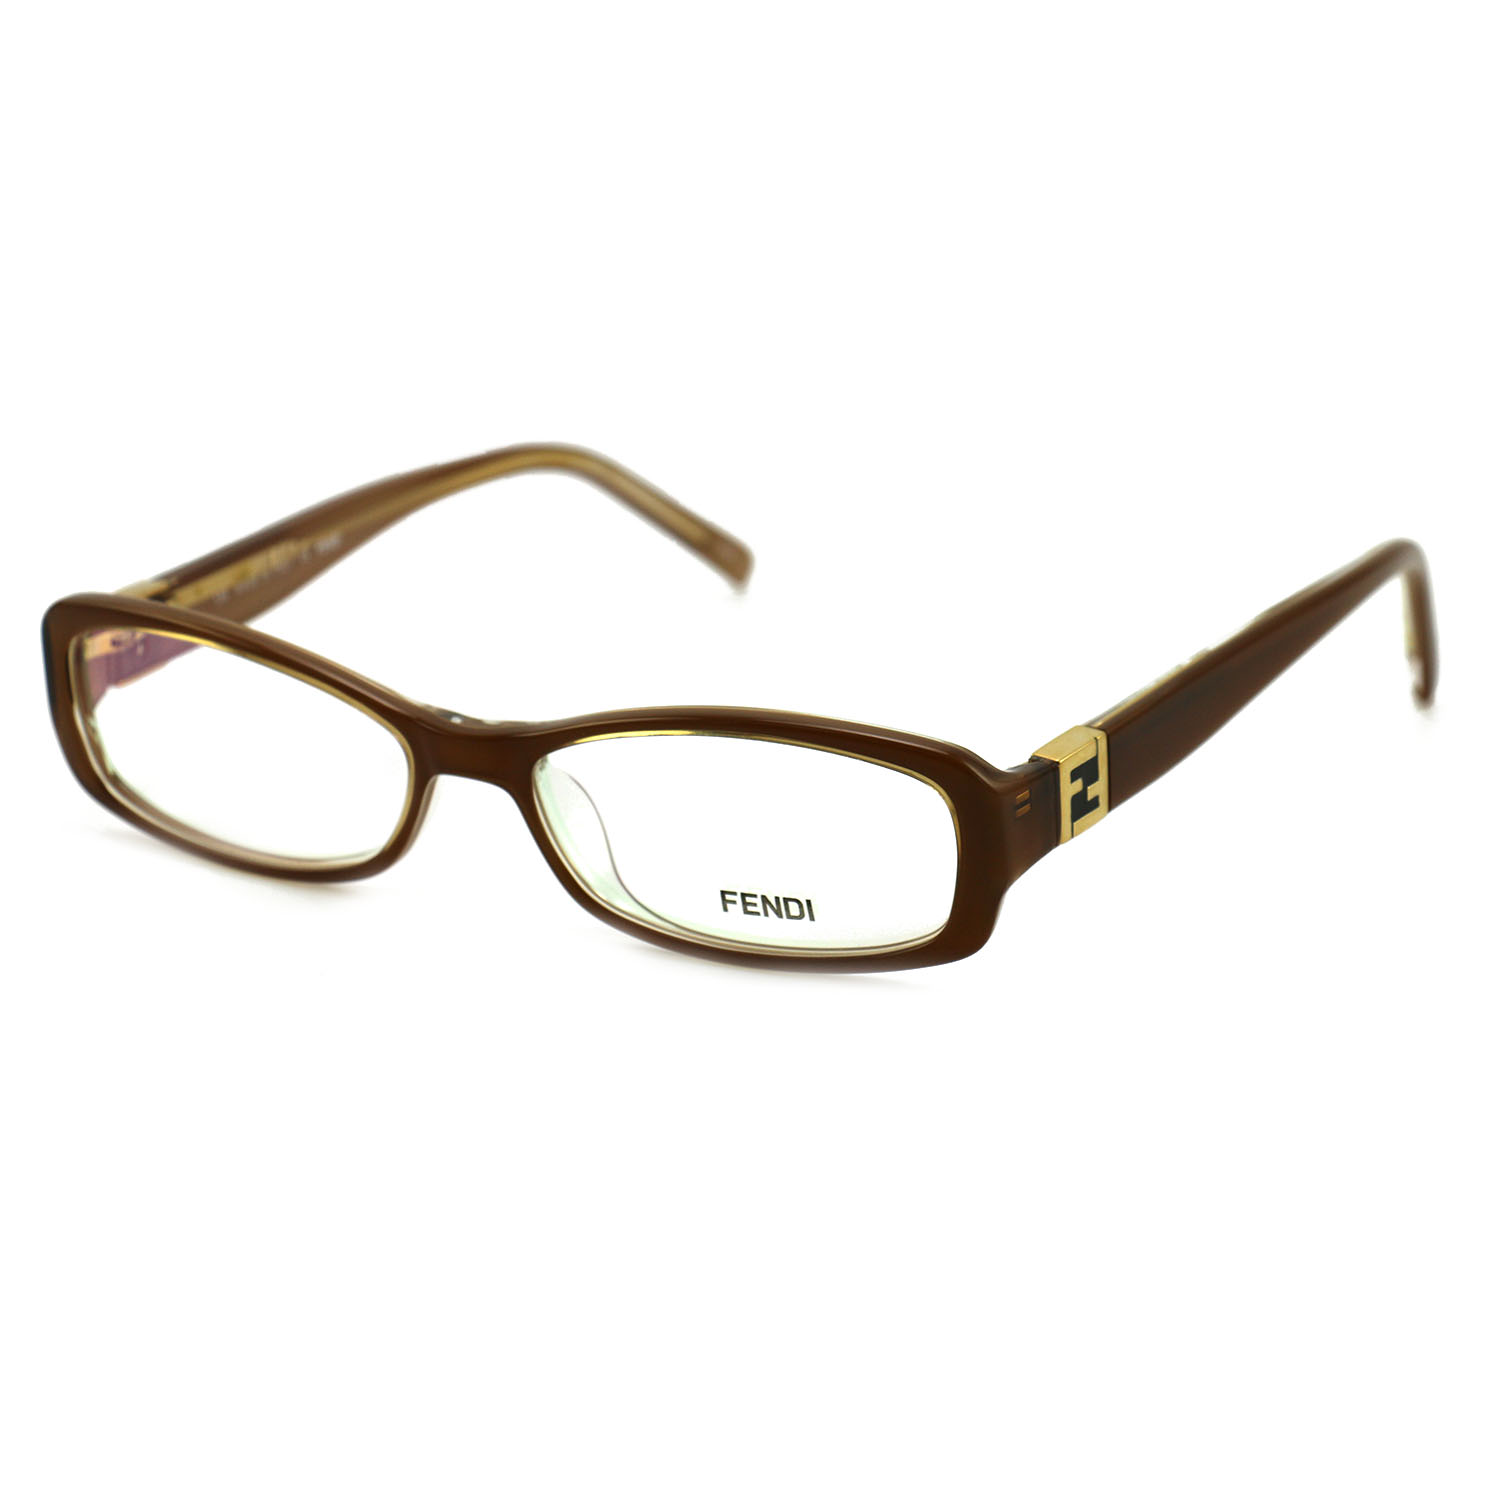 Fendi Womens Eyeglasses F996 210 Brown 51 15 135 Frames Oval | eBay